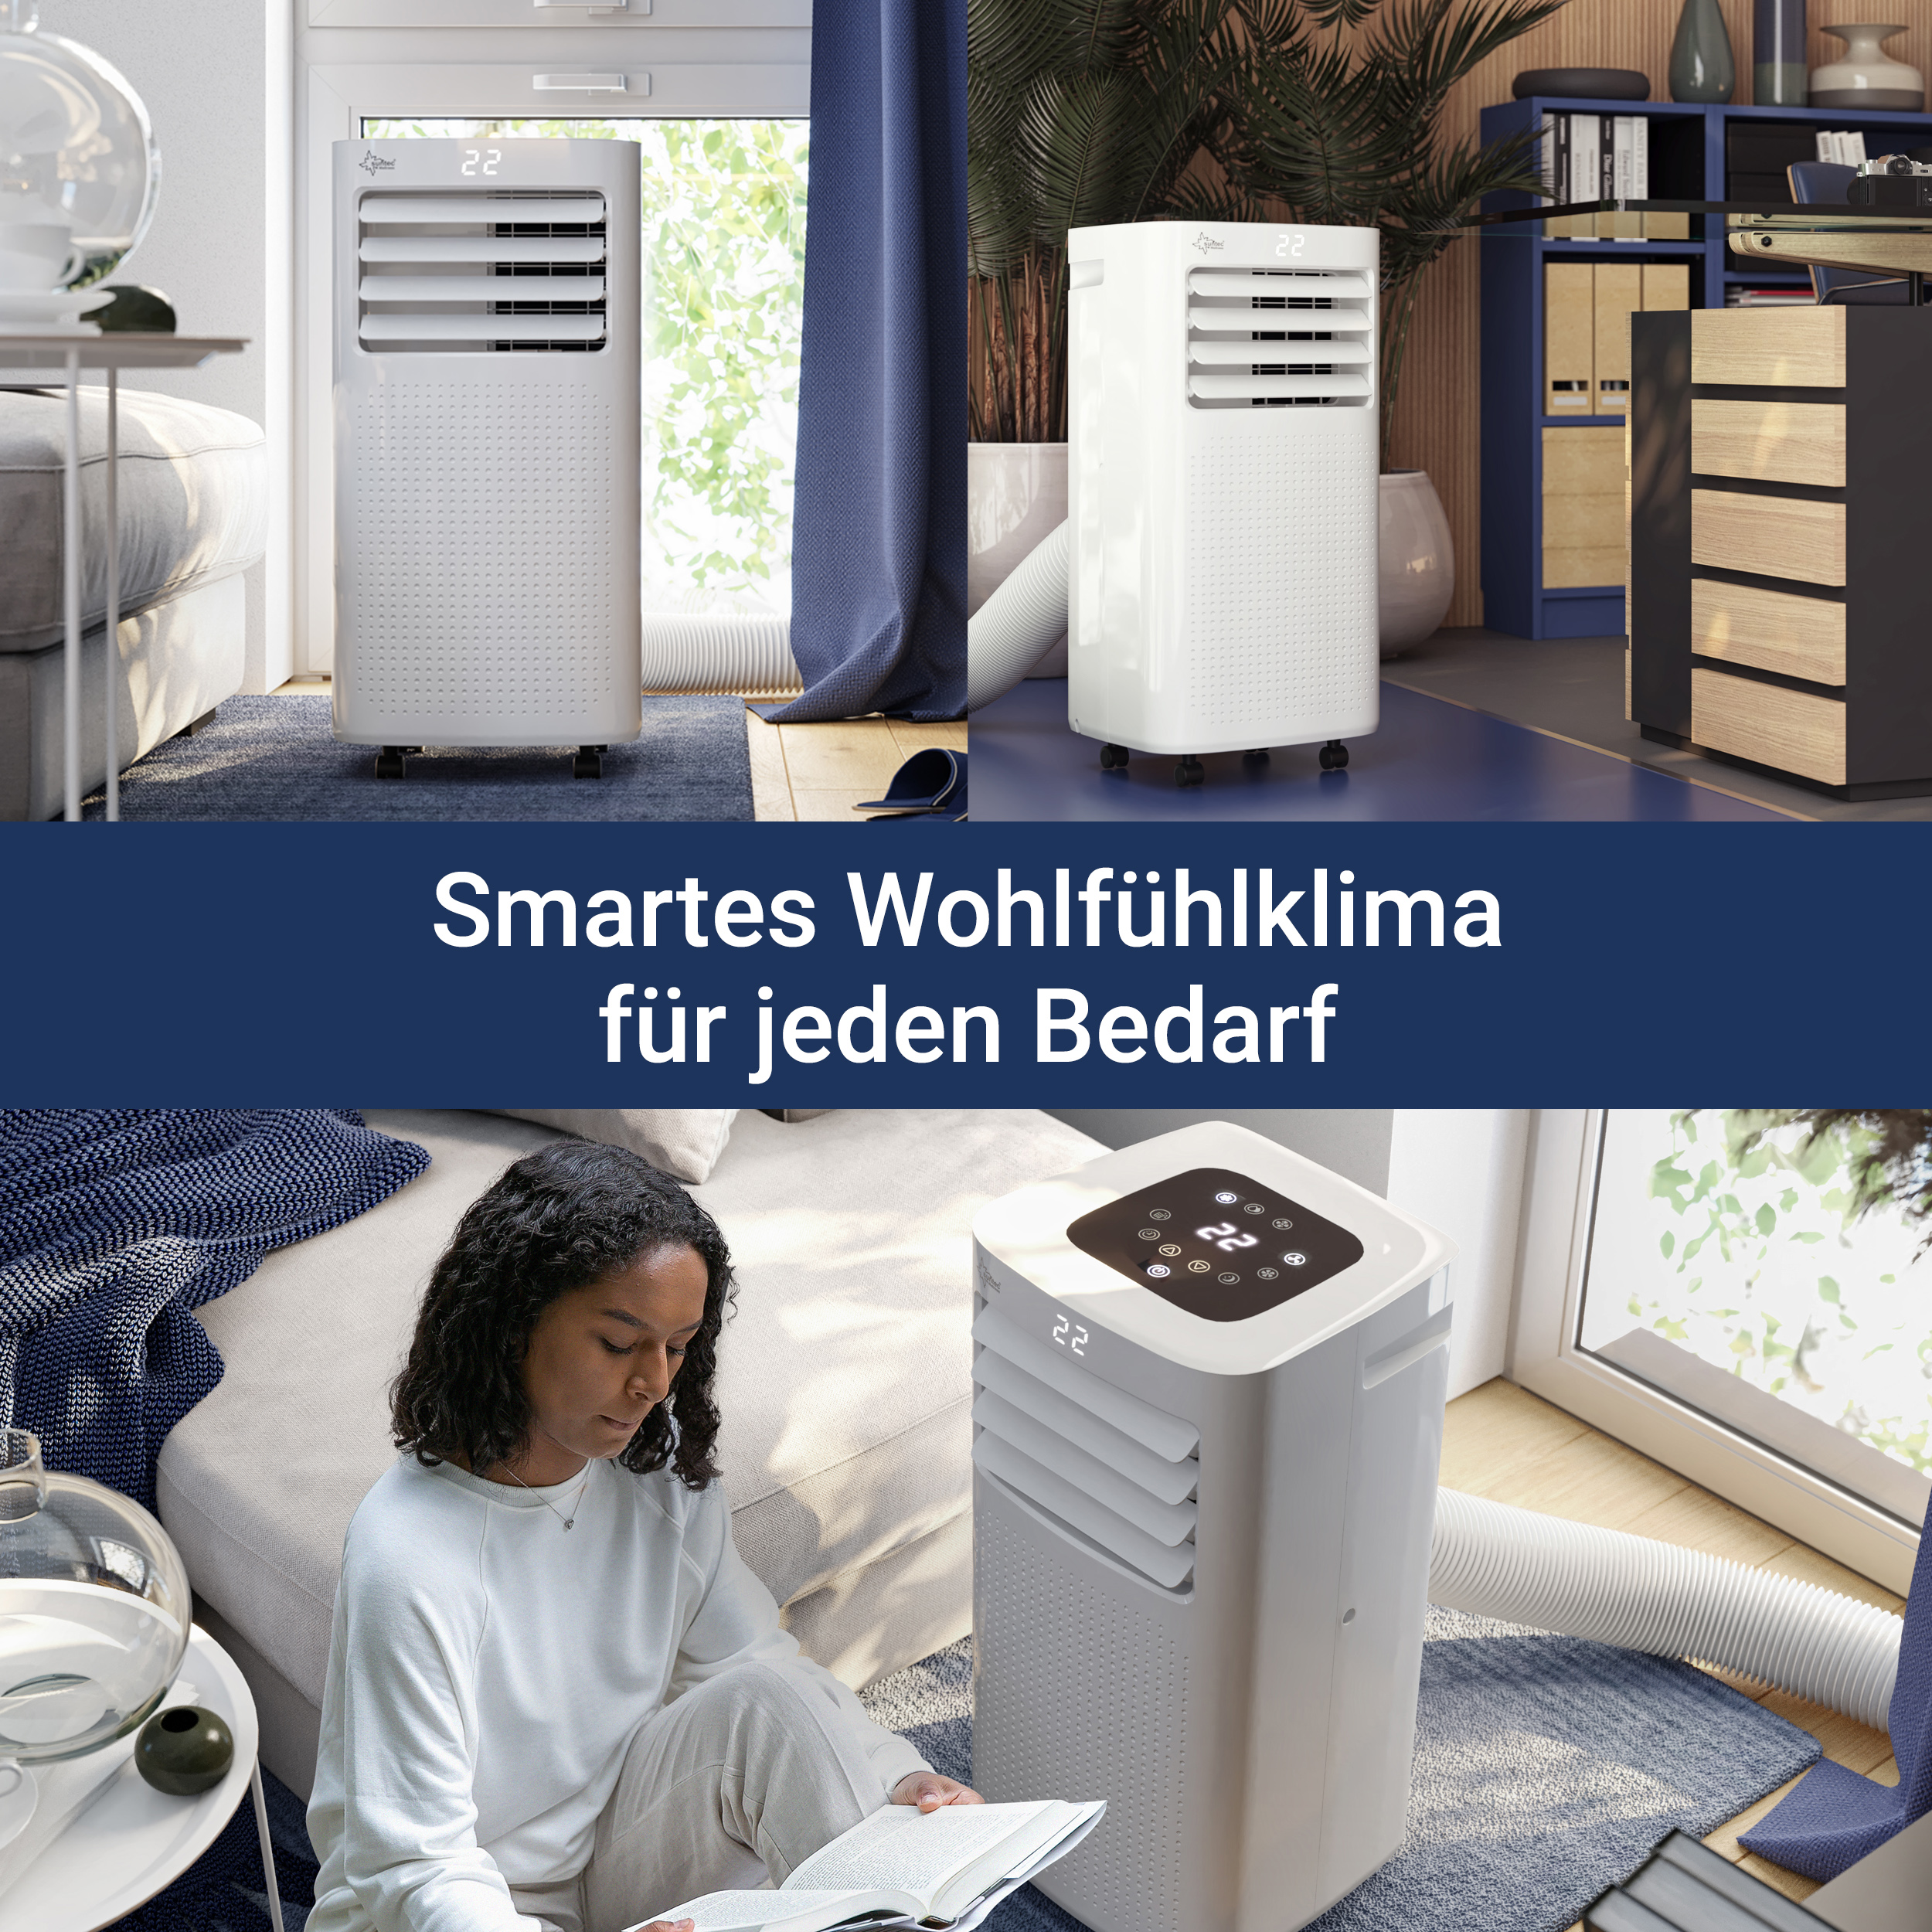 Weiß 34 Raumgröße: Eco m², Mobiles SUNTEC (Max. R290 EEK: A) 2.6 CoolFixx Klimagerät